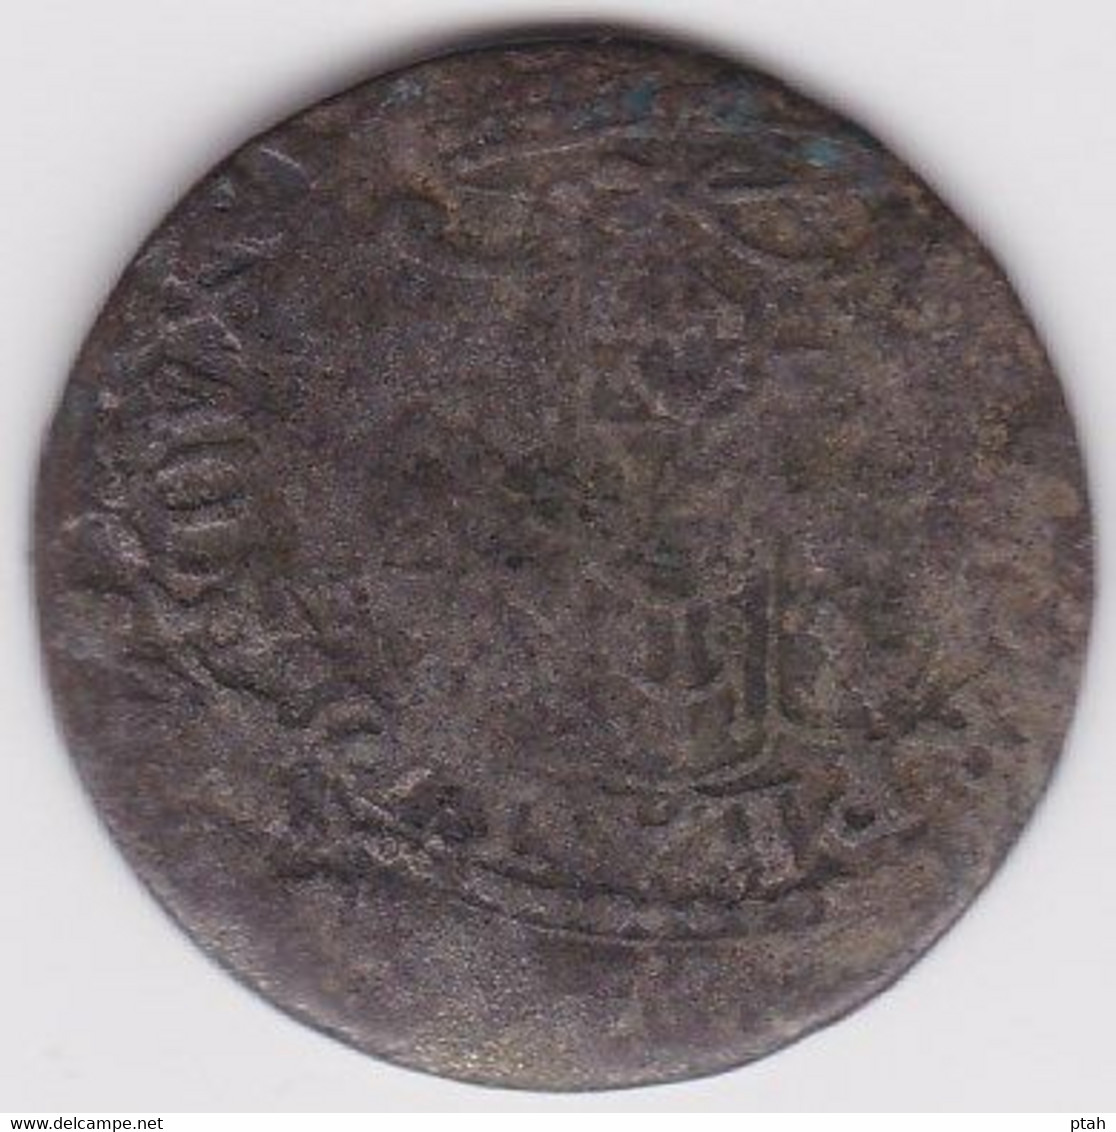 PIACENZA, Francesco, 10 Soldi - Feudal Coins